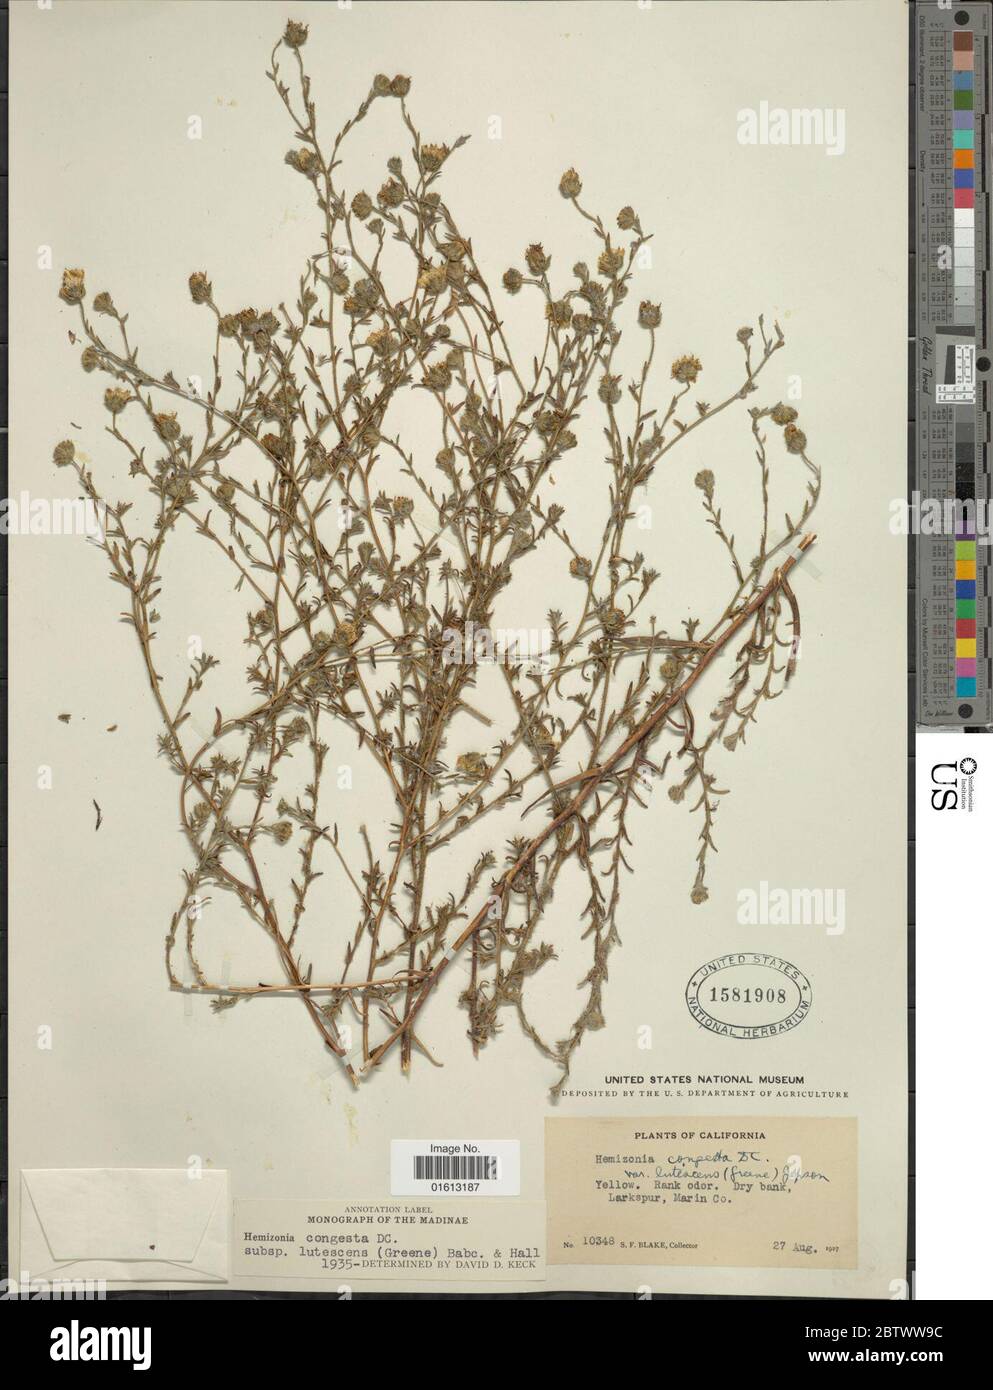 Hemizonia congesta subsp lutescens Greene Babc HM Hall. Stock Photo